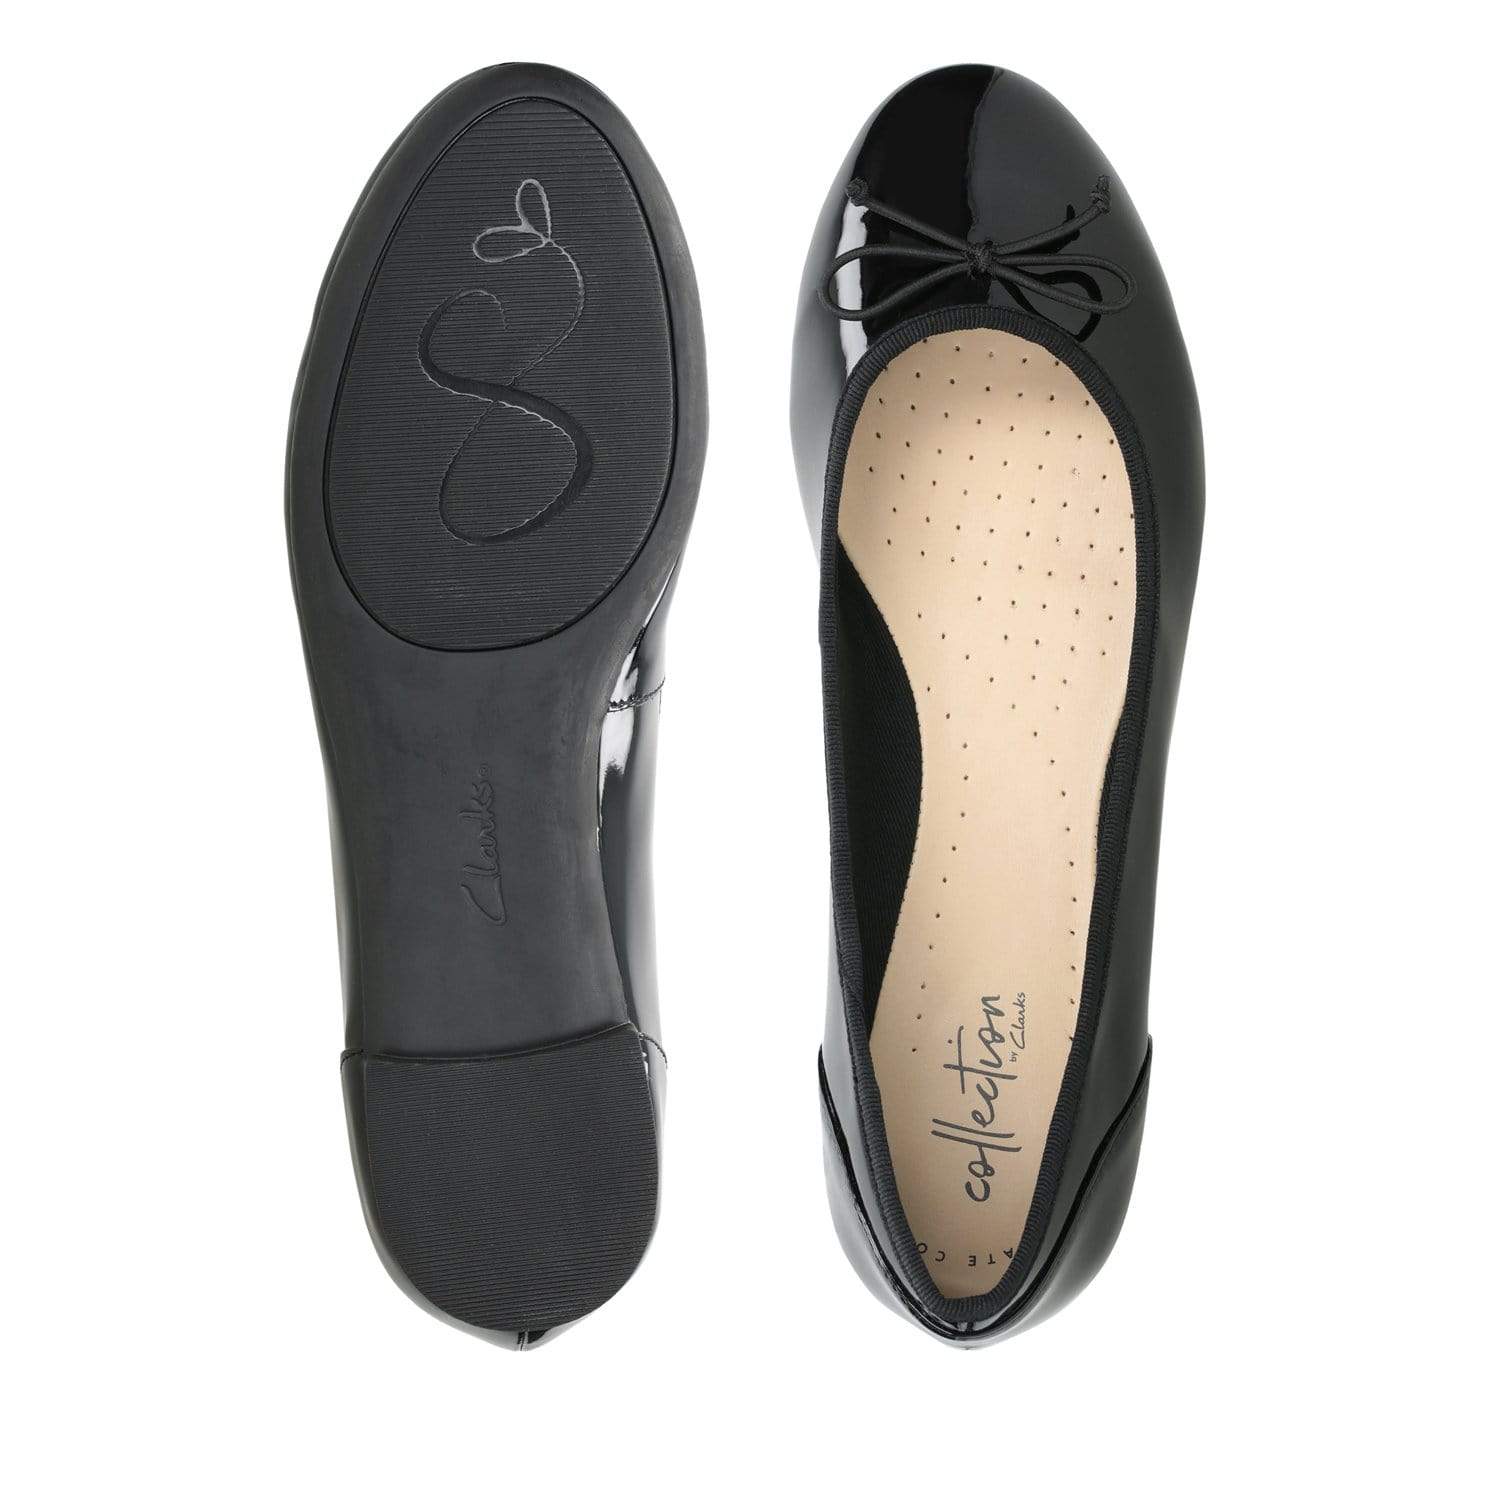 Clarks Couture Bloom - Shoes - Black Pat - 261154754 - D Width (Standard Fit)